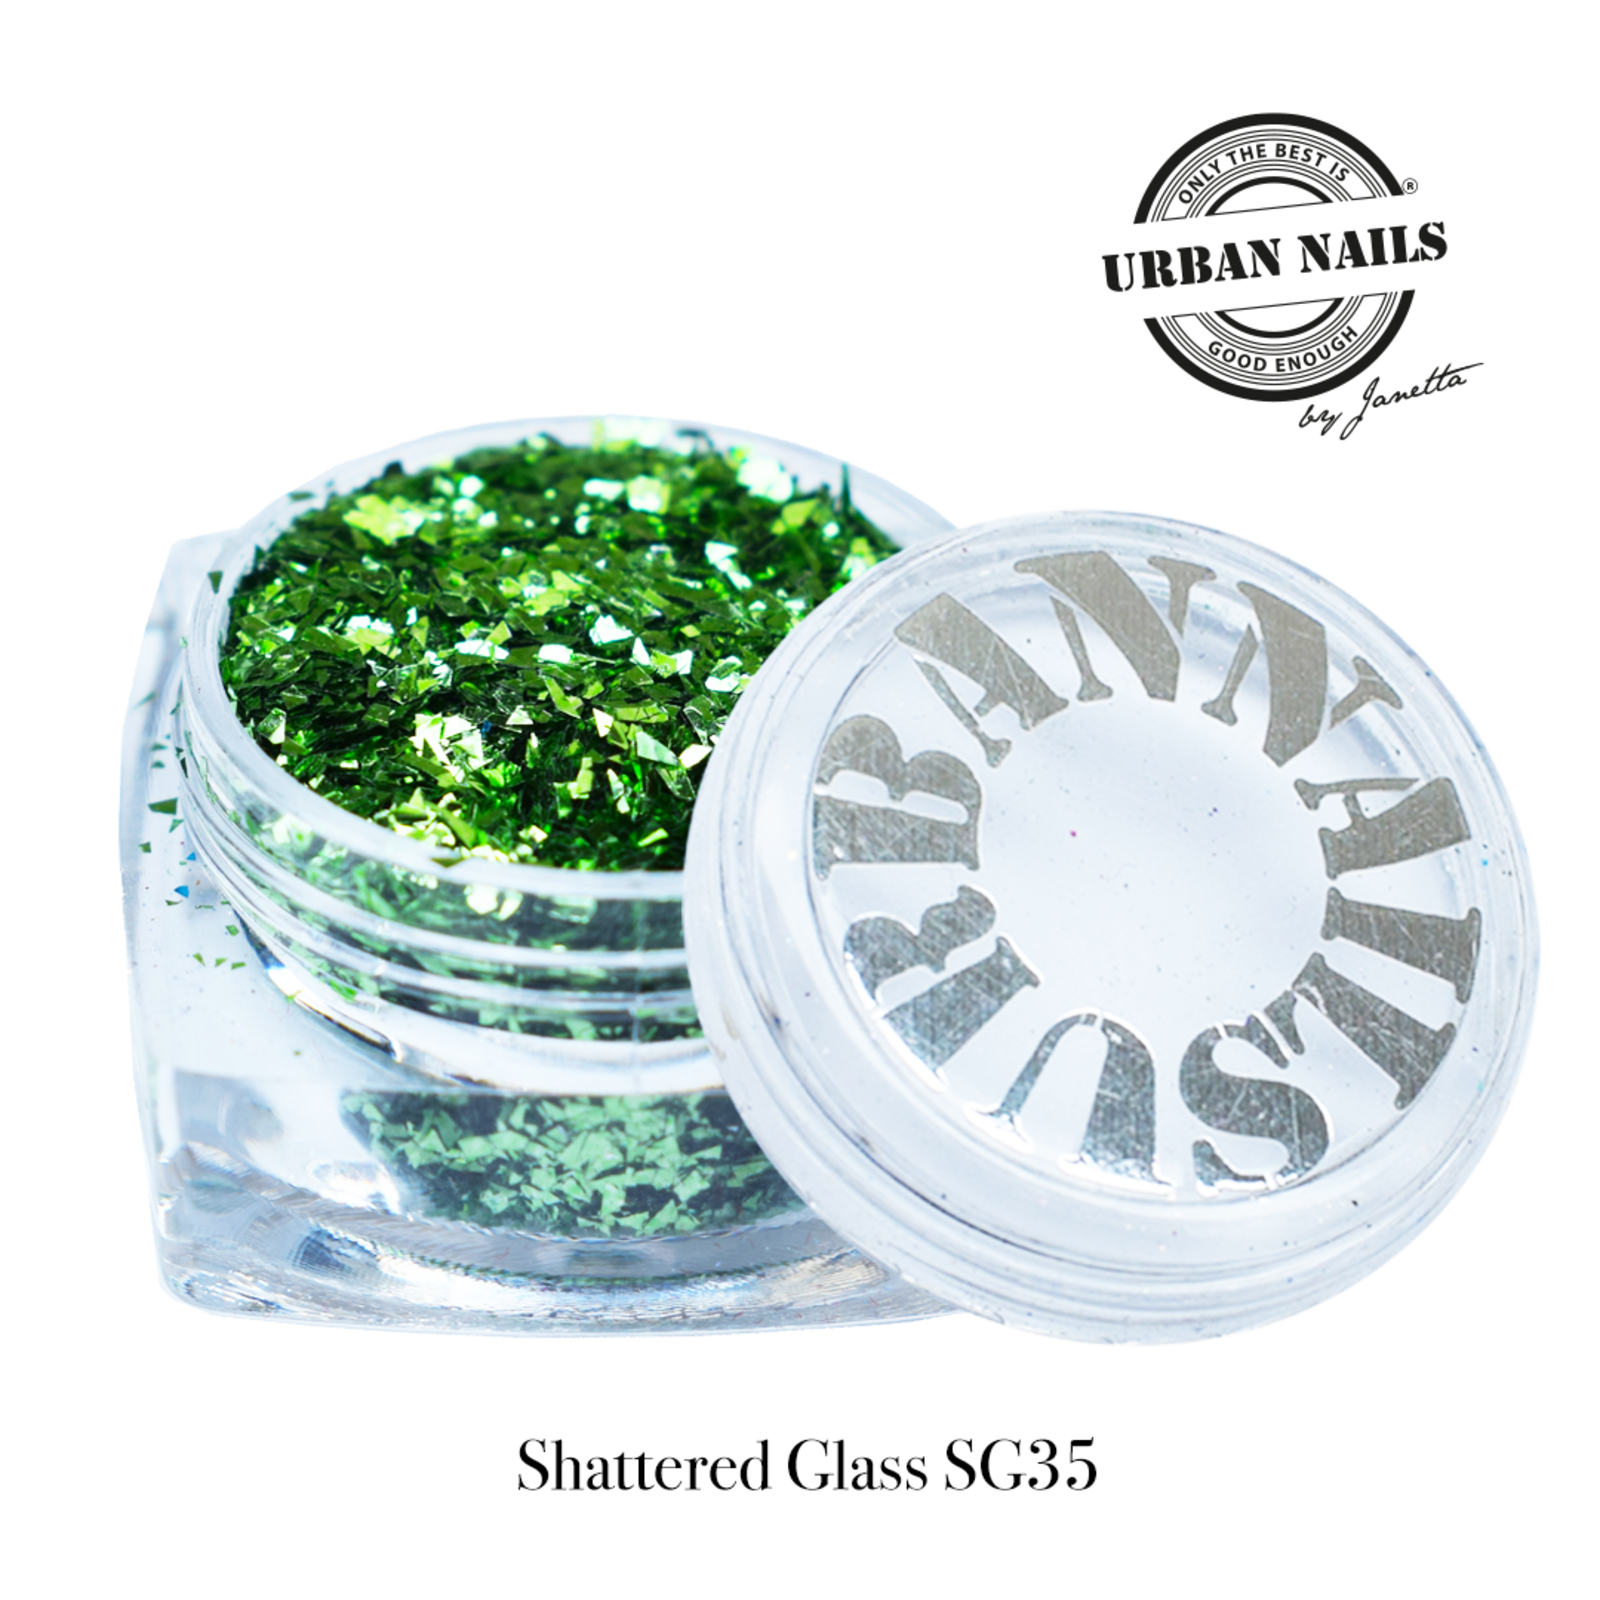 Urban nails Shattered Glass SG35 gras groen